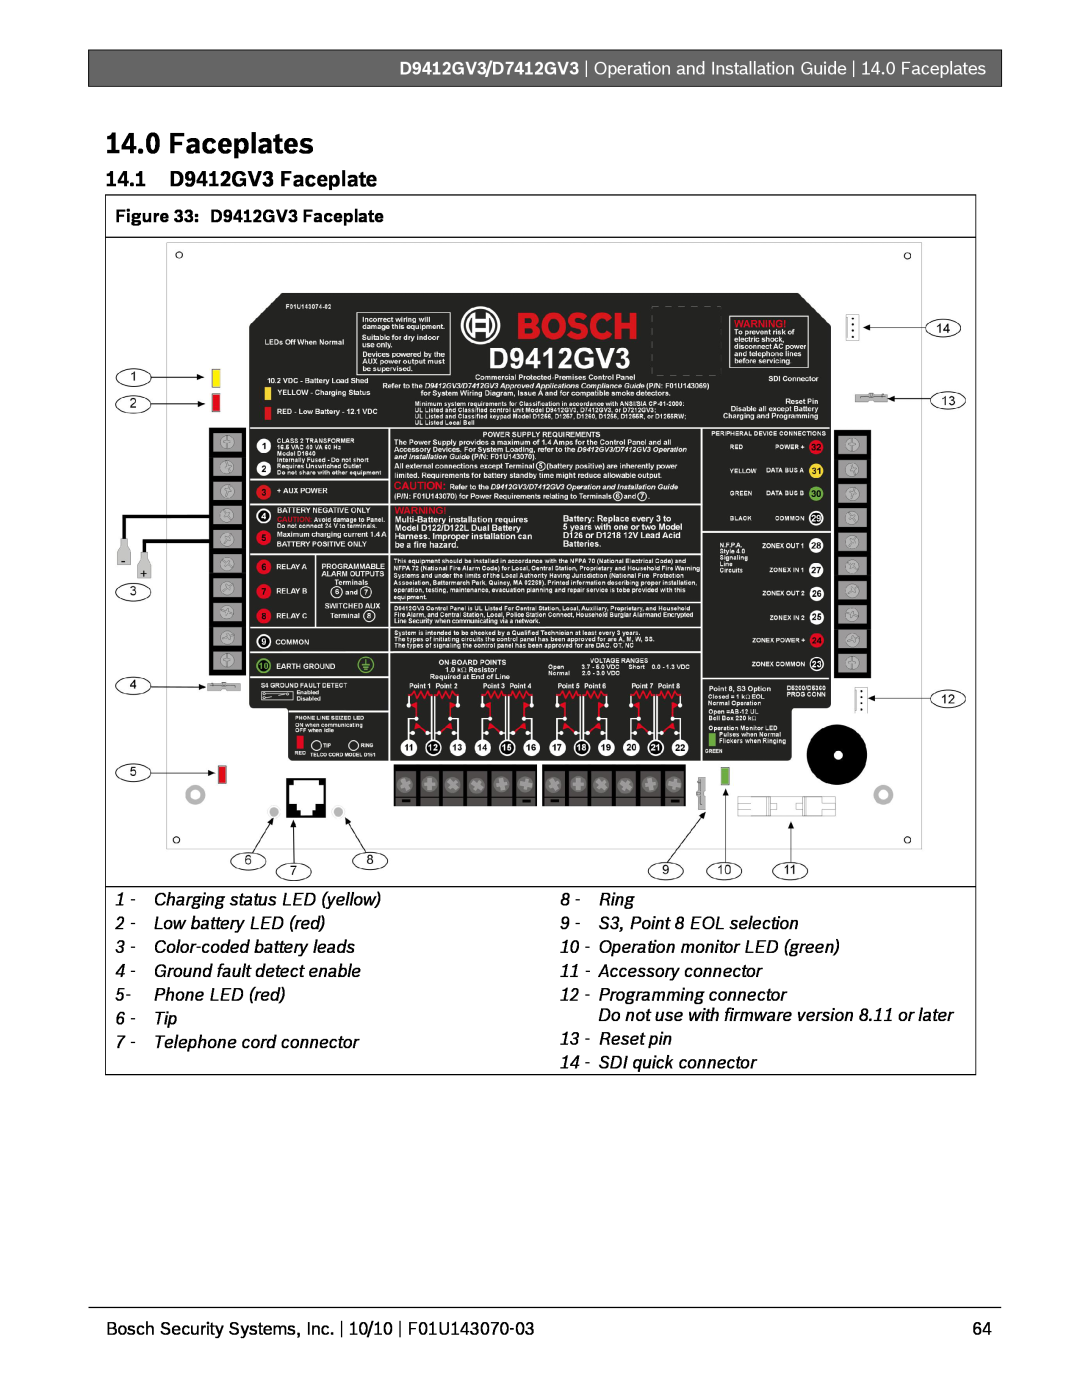 Bosch Appliances D7412GV3 manual 14.0Faceplates, 14.1D9412GV3 Faceplate 